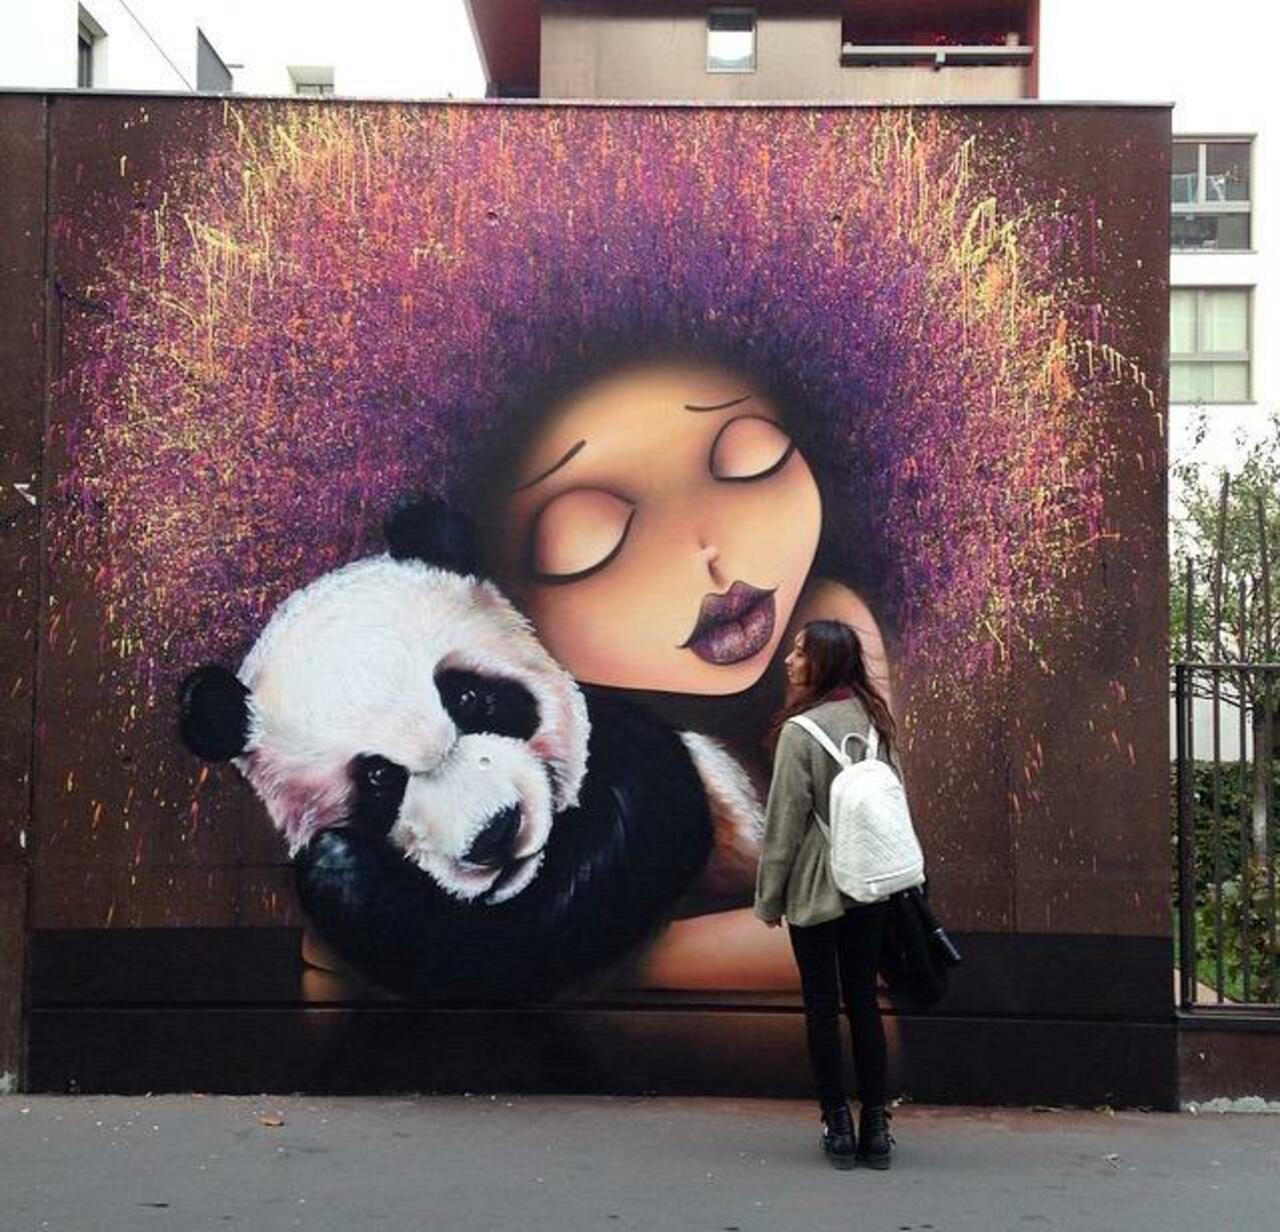 Street Art by VinieGraffiti in Paris 

#art #graffiti #mural #streetart http://t.co/rUx7cwCoCk http://cur.lv/qp6mi